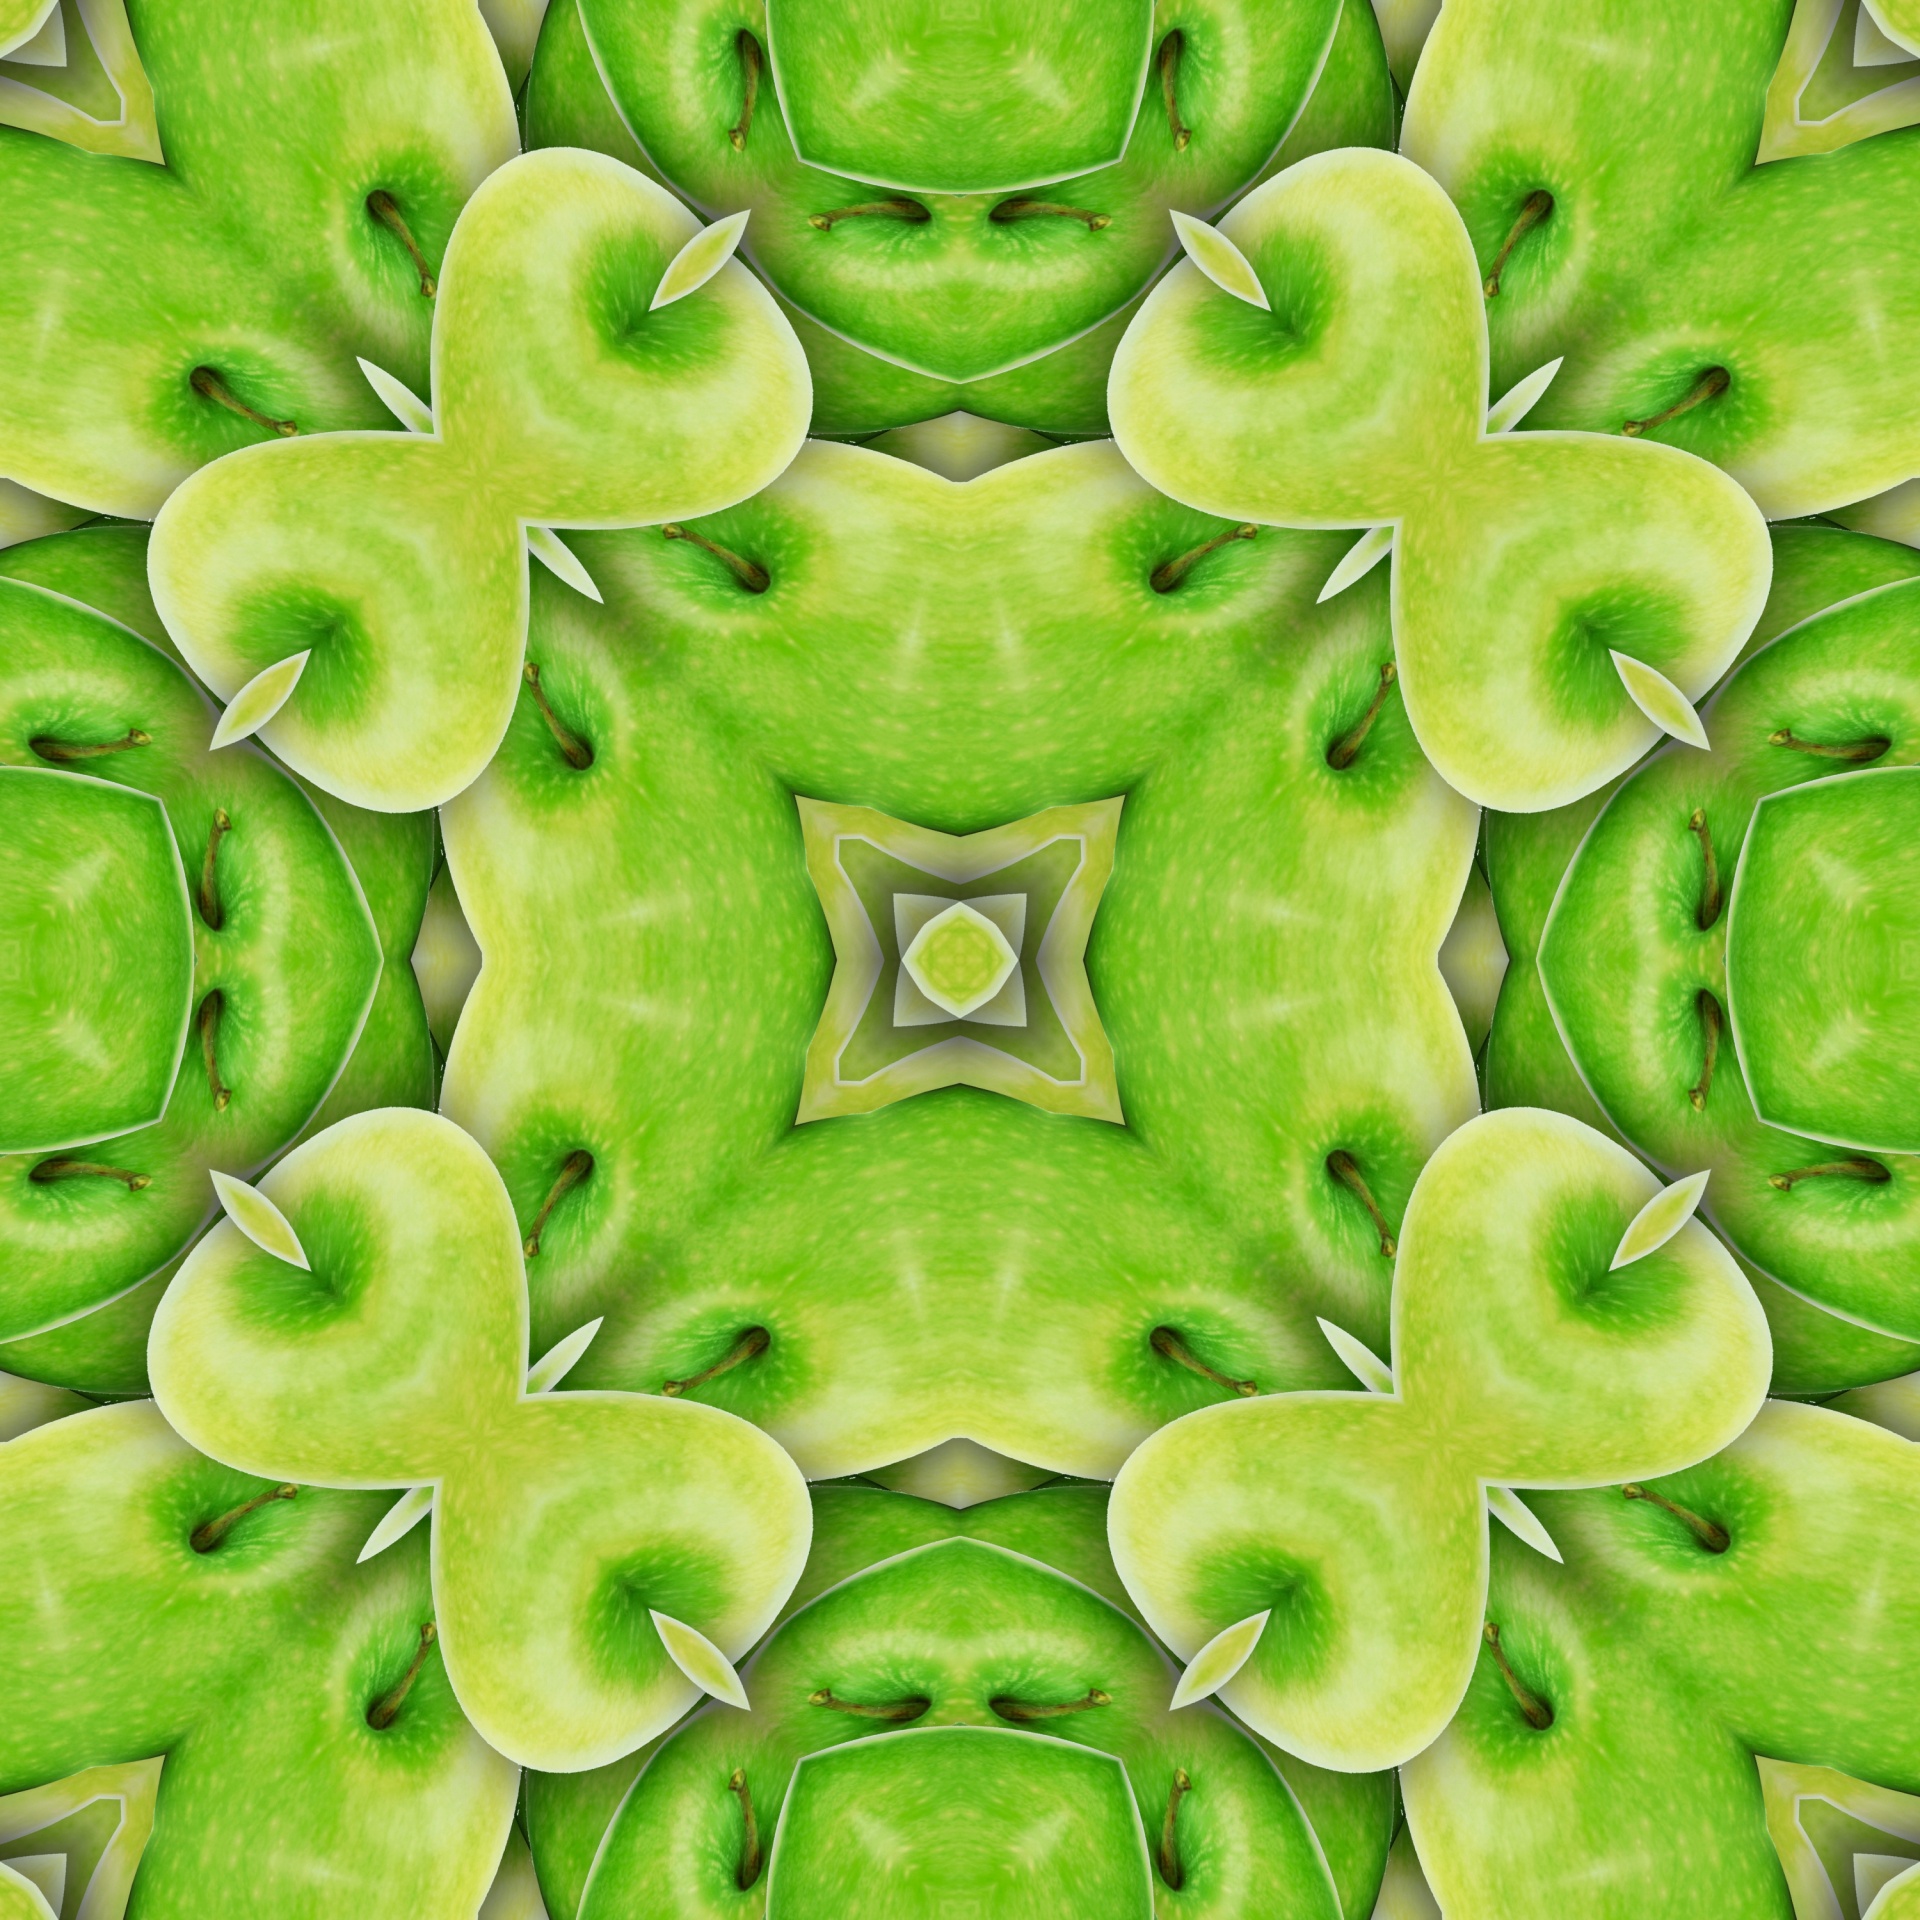 Green Apples 01